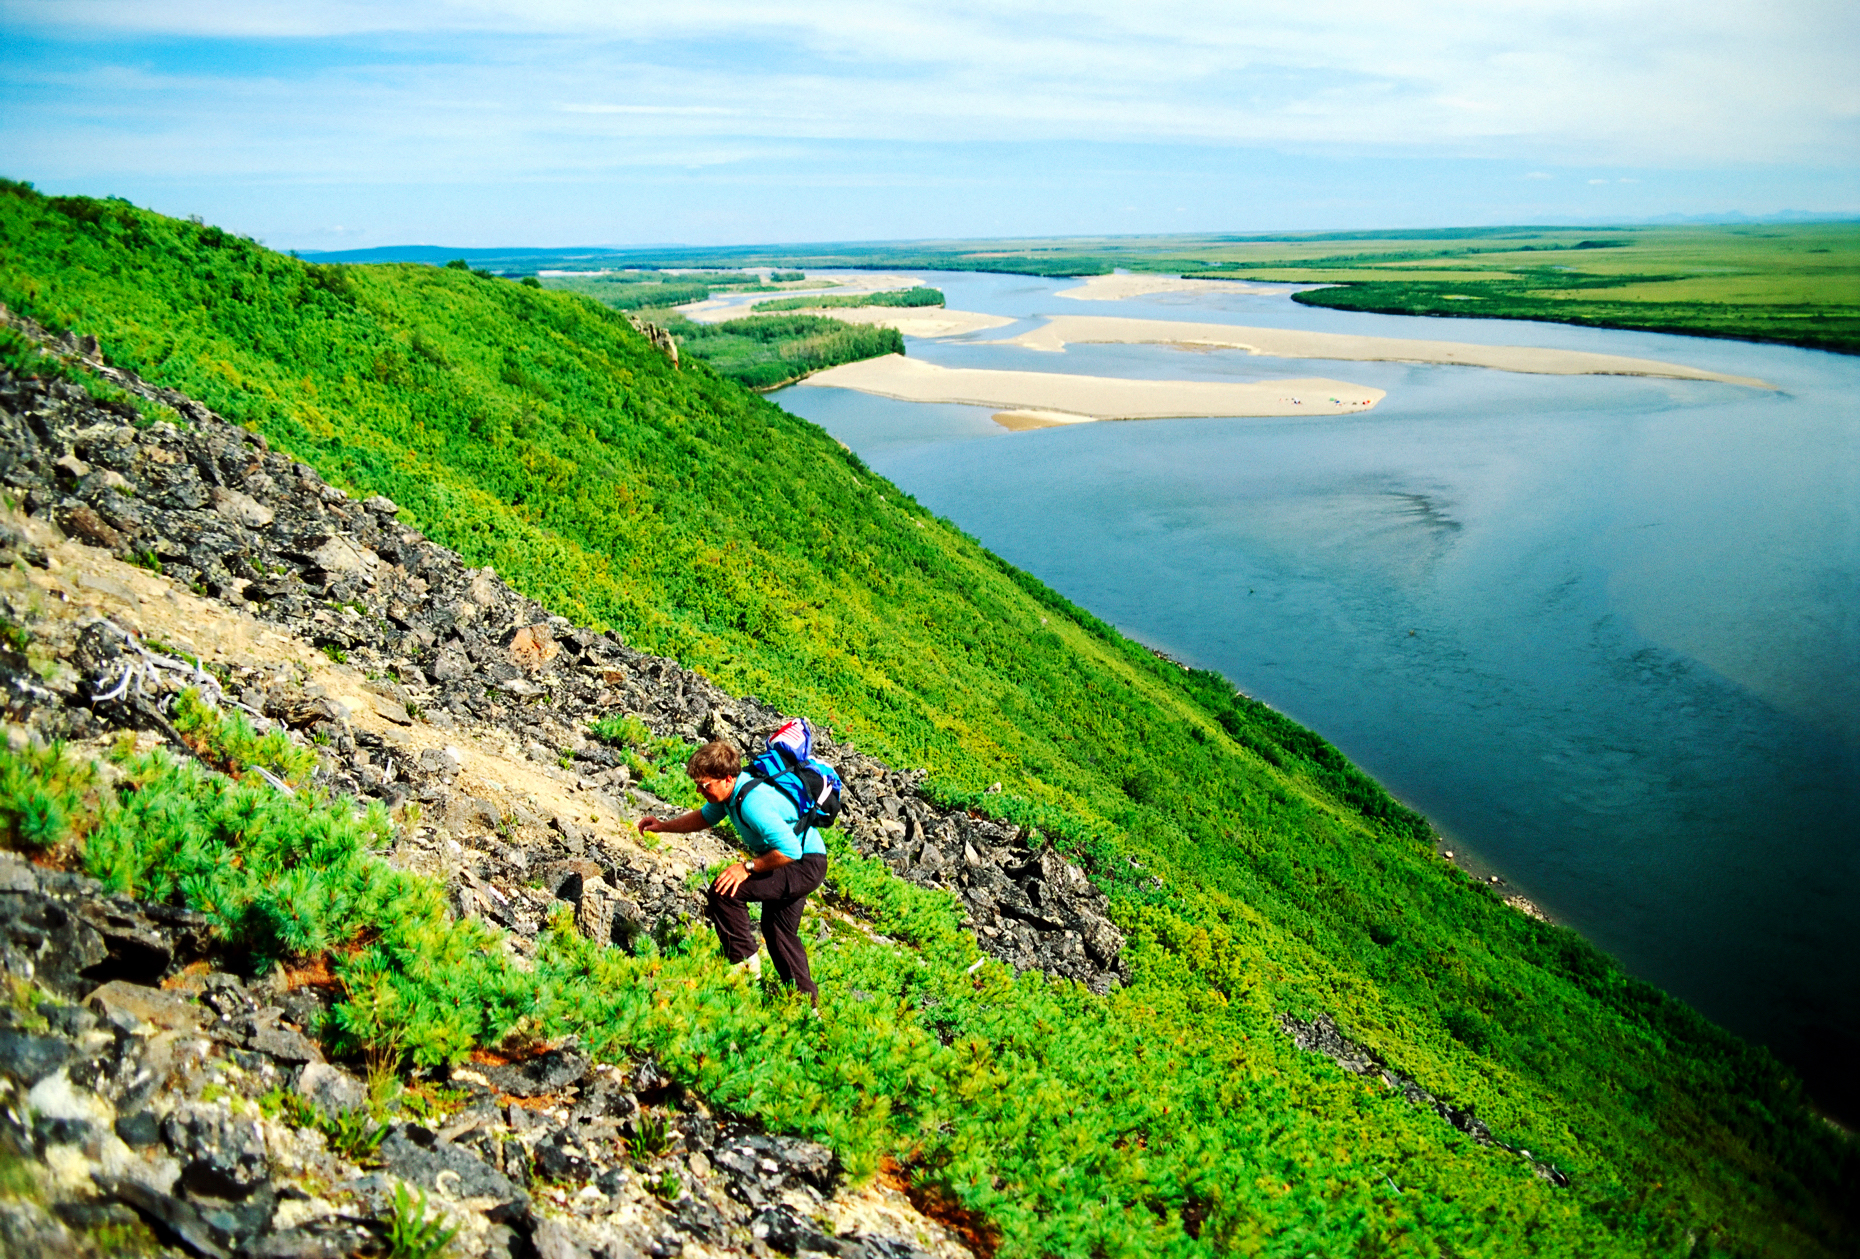 American tourist hiking above the Belaya River, Chukchi Peninsula, Magadon Region, Siberia, former Soviet Union